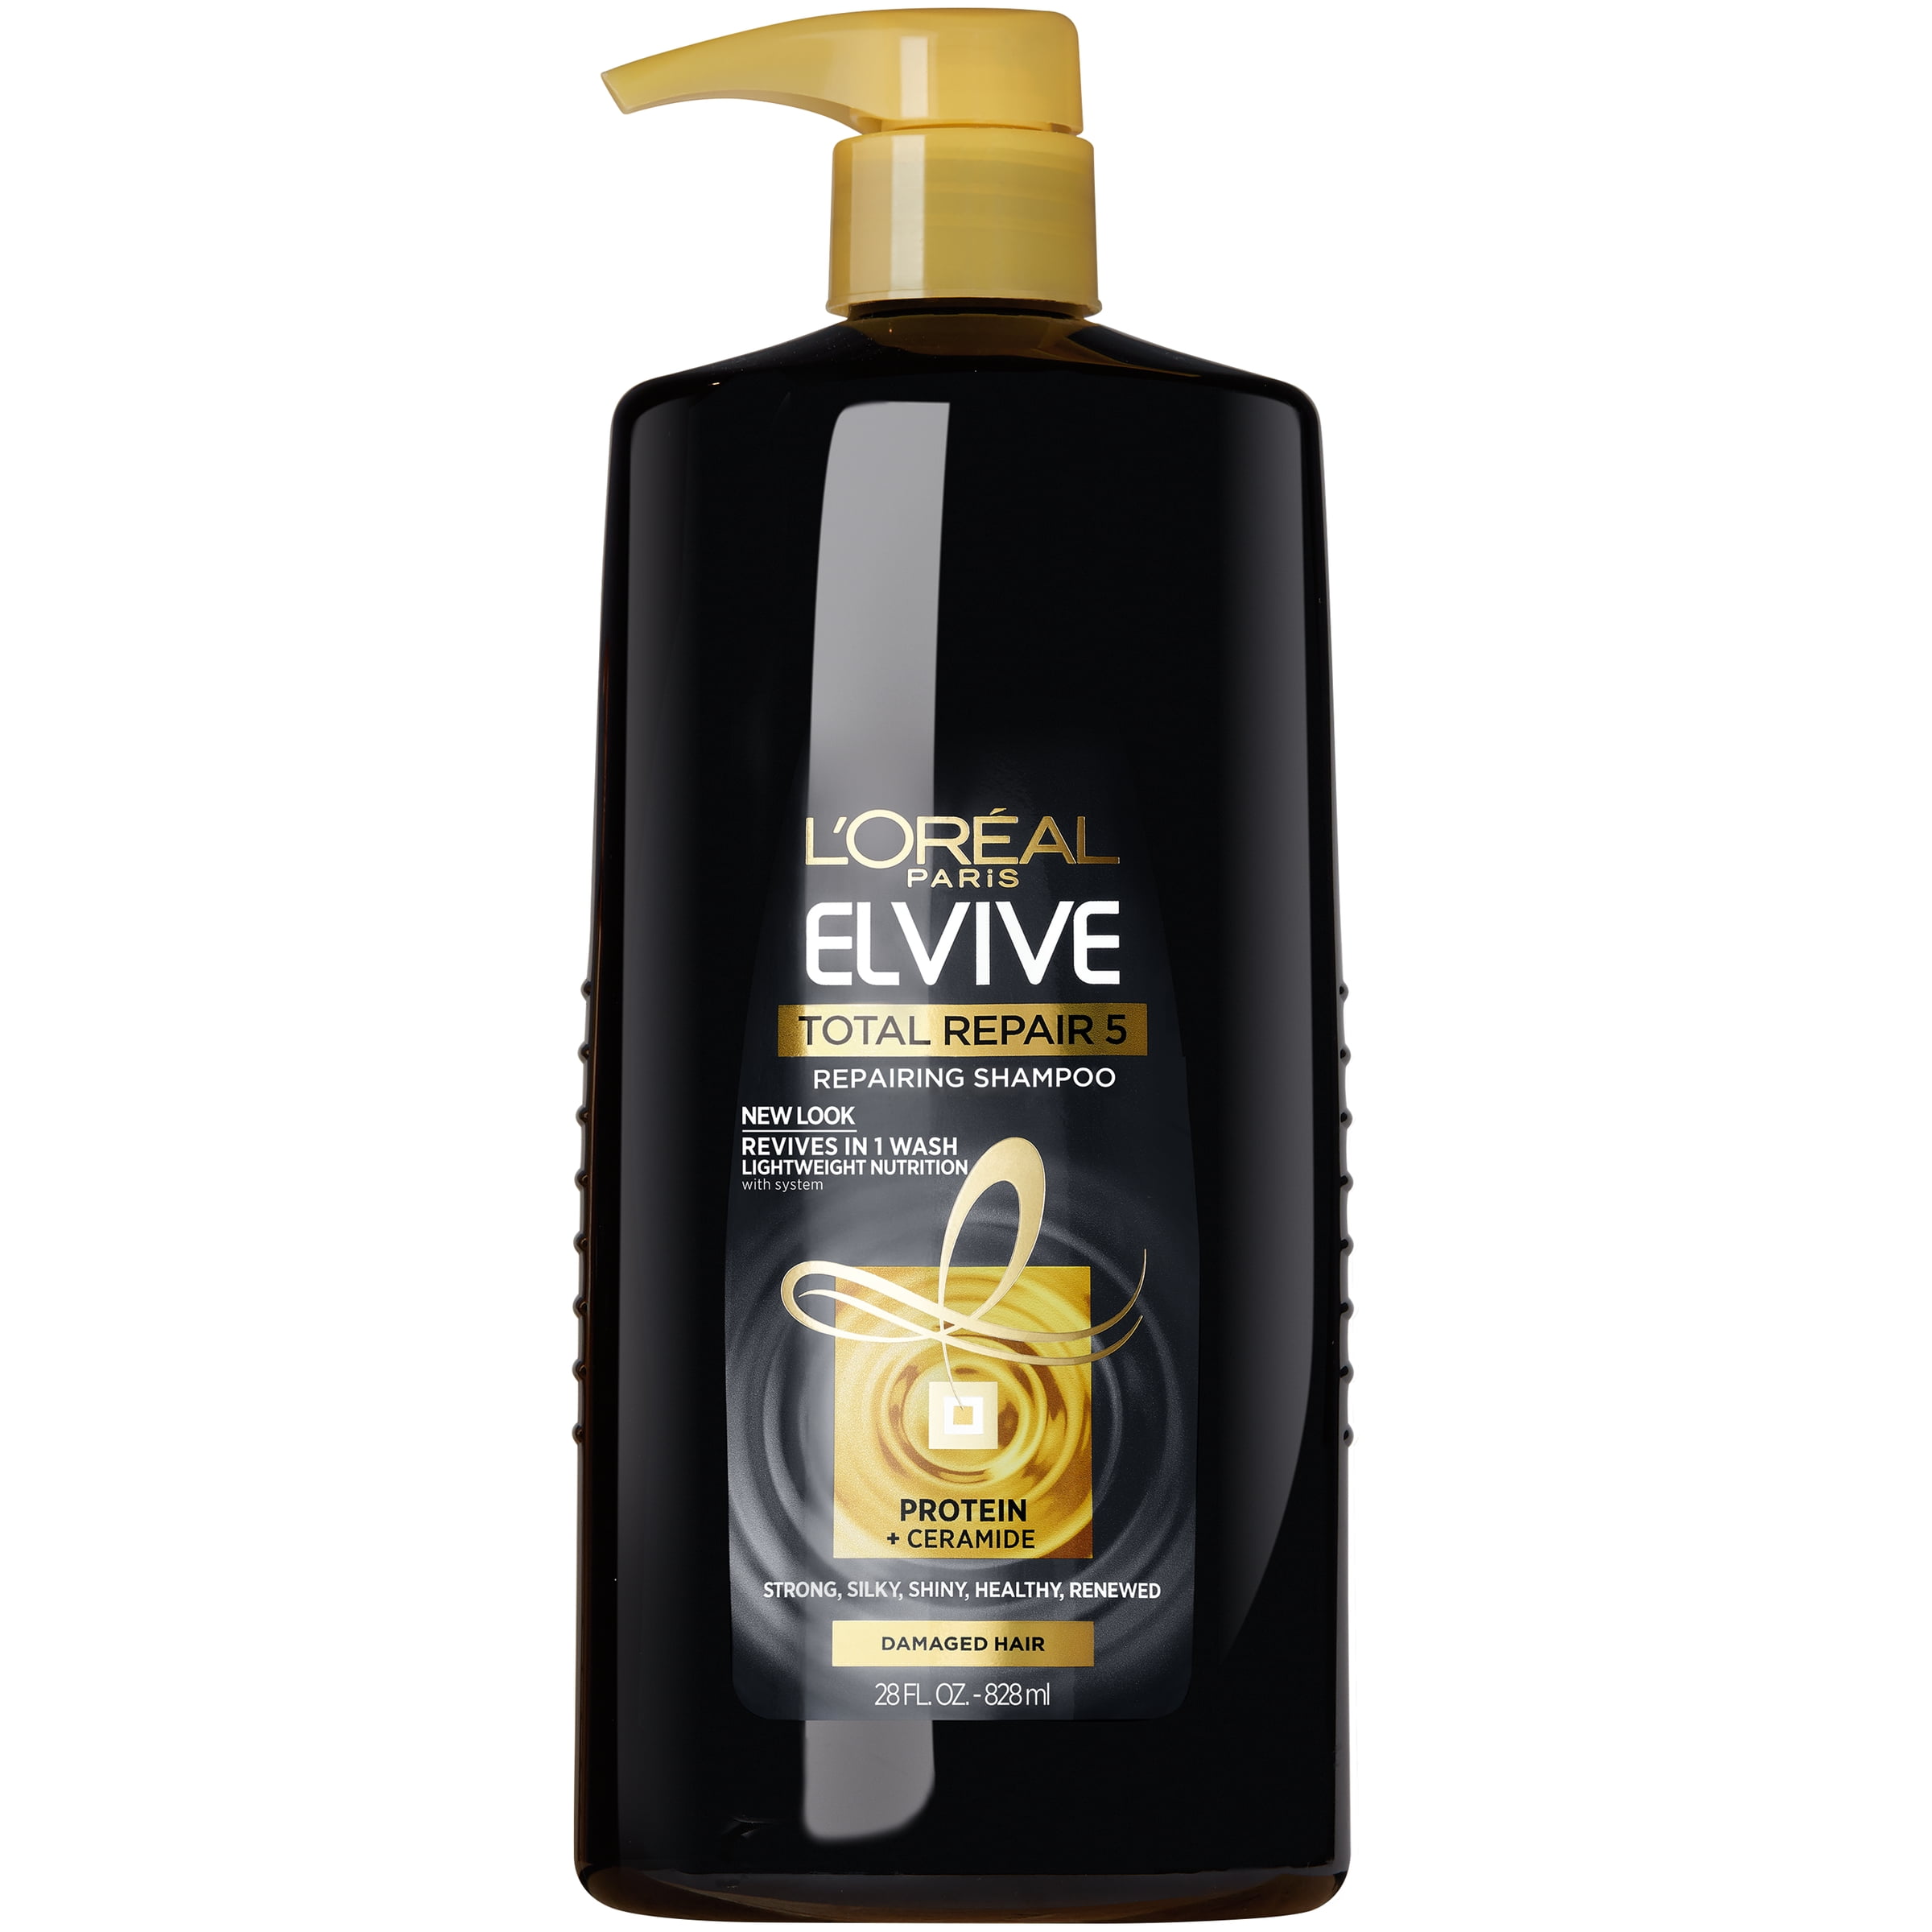 L'Oreal Paris Elvive Repairing Shampoo with Protein, 28 fl oz